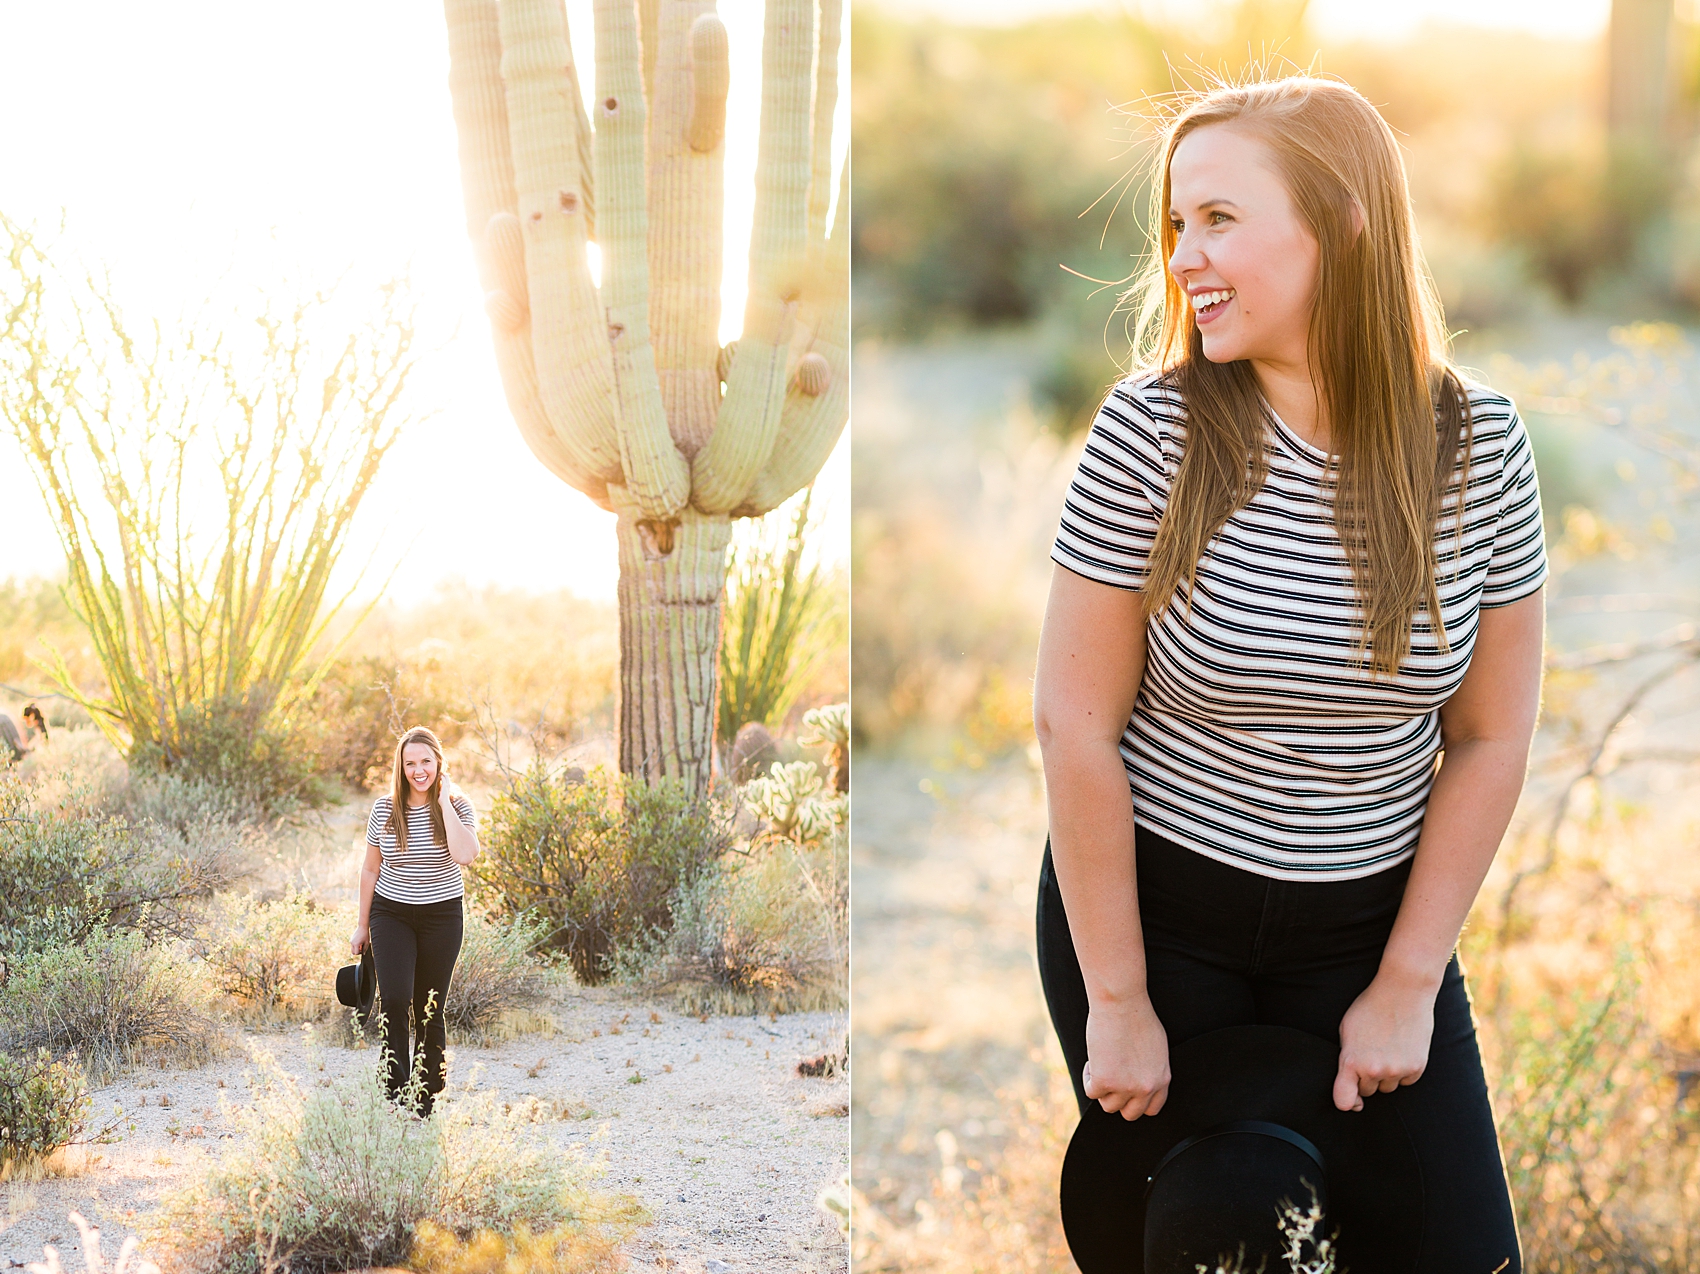 Leah Hope Photography | Scottsdale Phoenix Arizona | Desert Landscape Cactus Scenery | McDowell Mountains | Head Shots | Brand Photography | Portraits